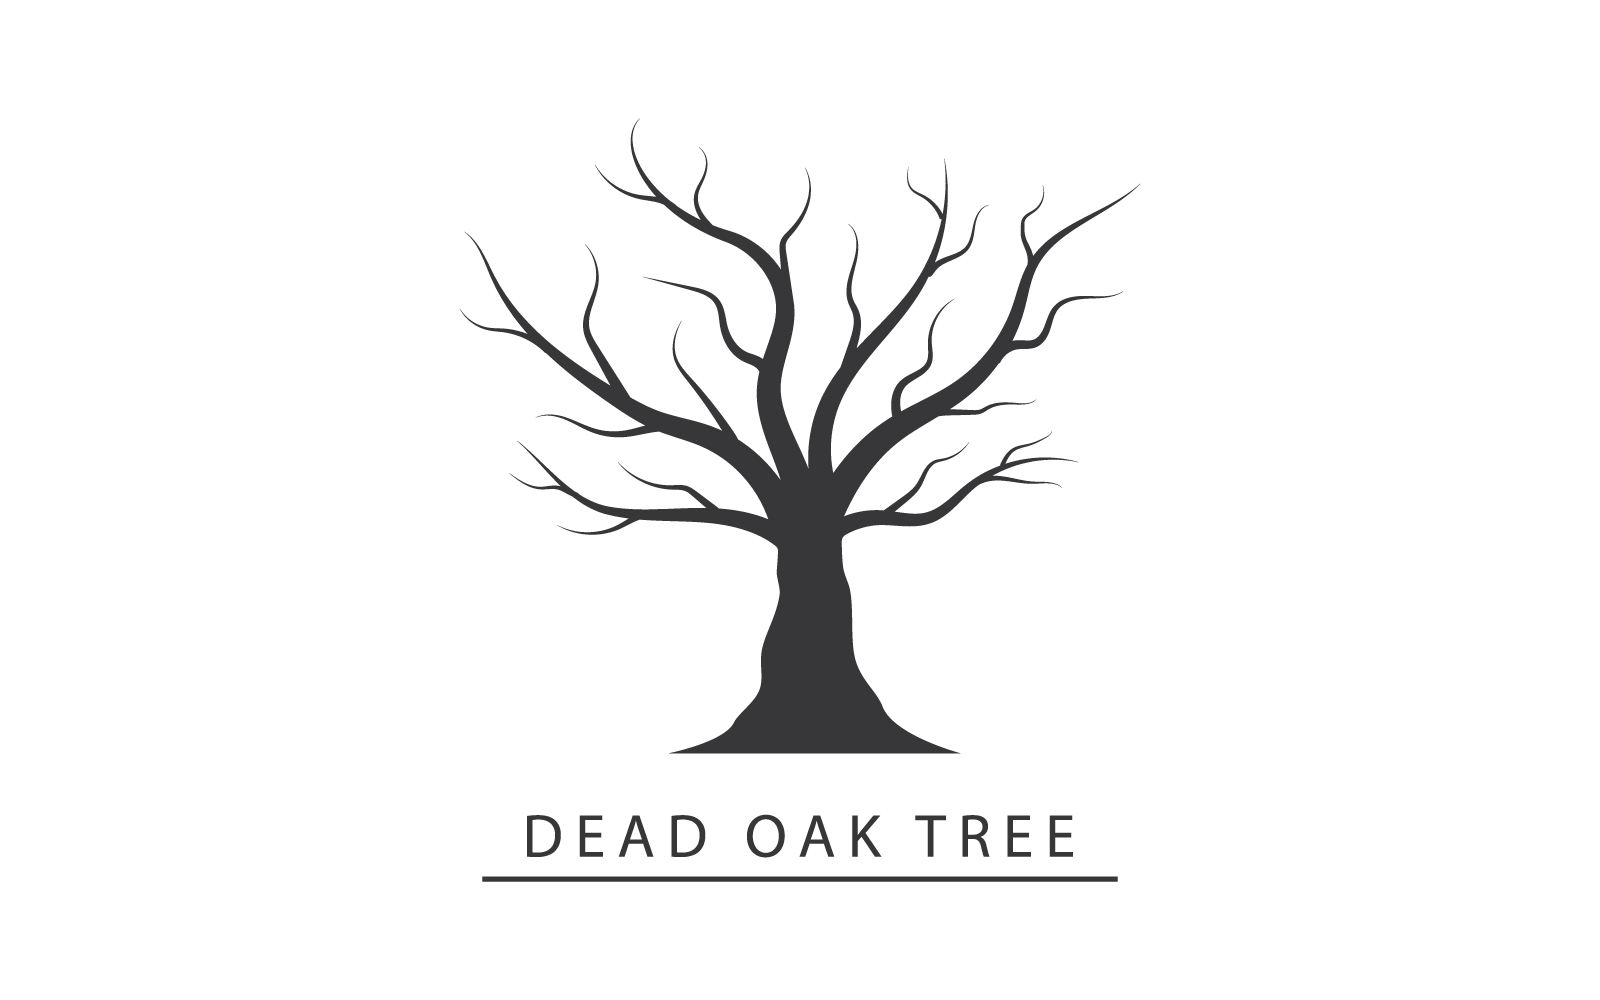 Old Oak tree nature illustration logo template vector design